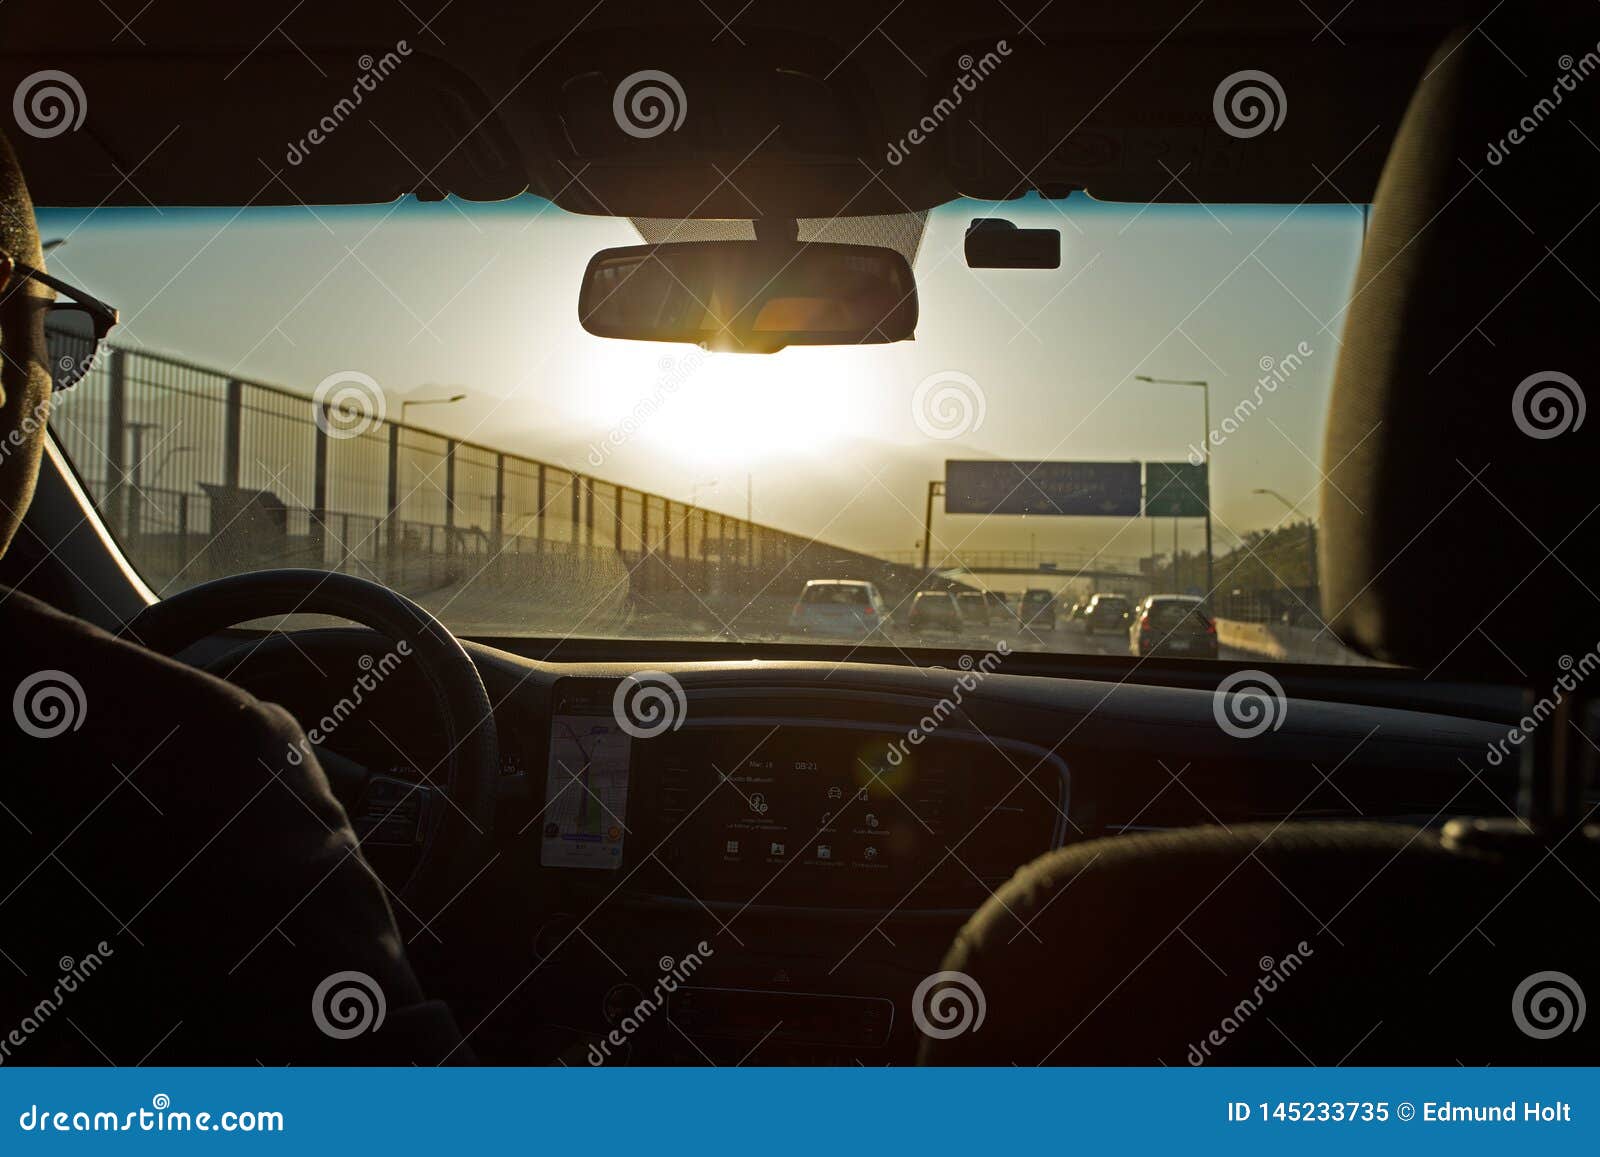 driving into the sunrise, santiago, chile